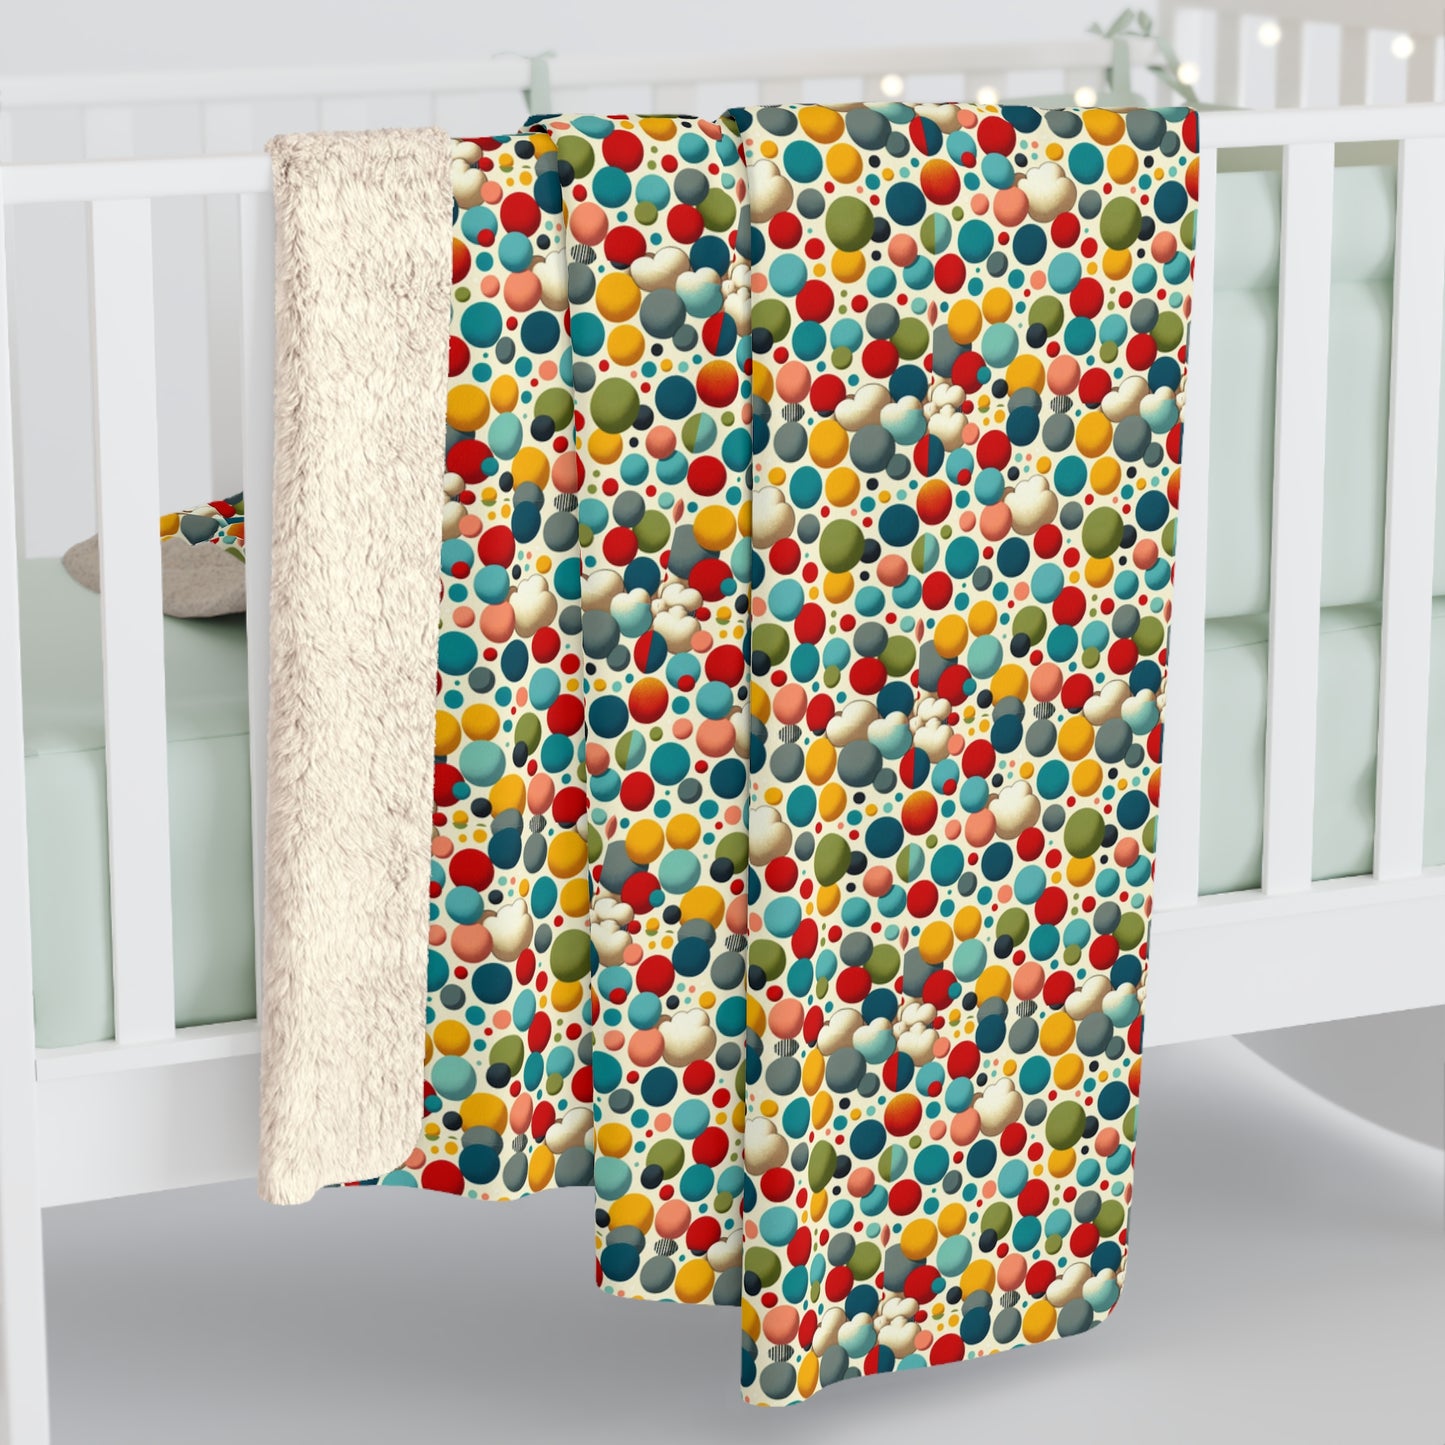 Colorful Whimsy Polka Dot Sherpa Fleece Blanket - Fun and Bright Design